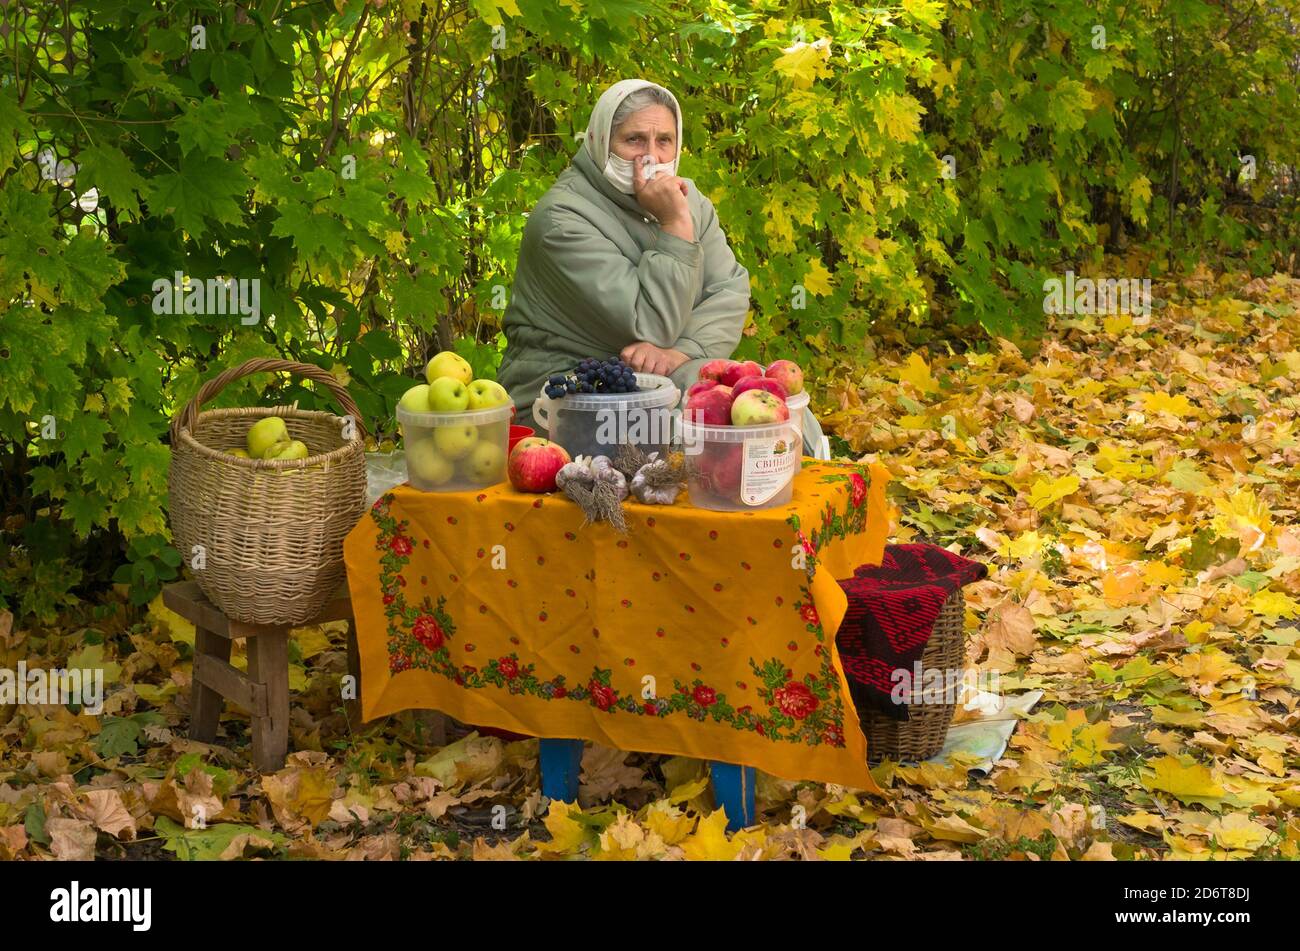 KONSTANTINOVO, RYAZANSKAYA OBLAST', RUSSIA - OCTOBER 03, 2020: Russian babushka wearing a mask sells apples, grapes and garlic from her garden. Stock Photo